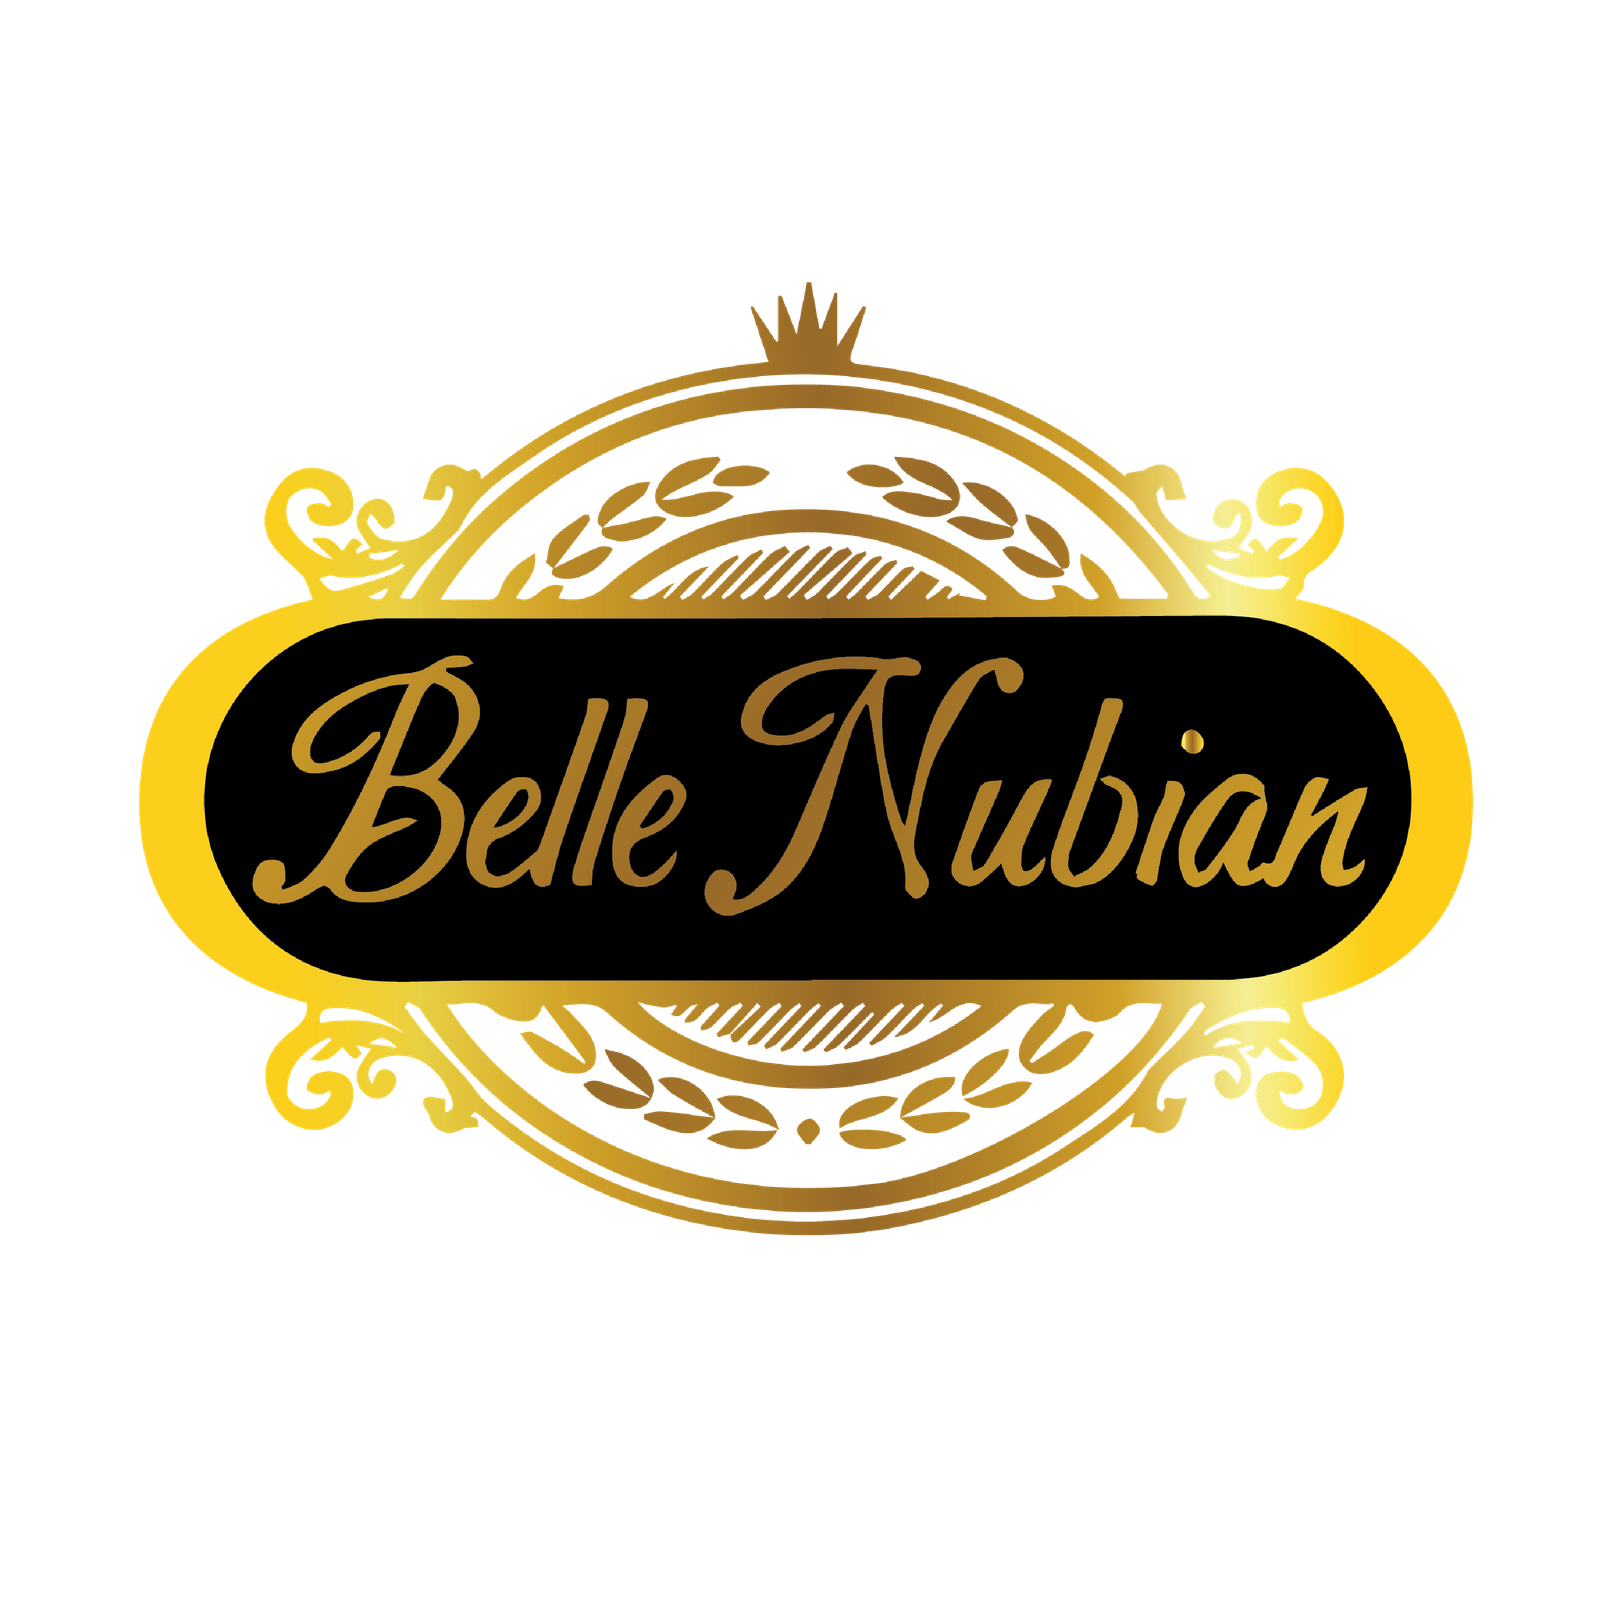 Belle nubian Gabon